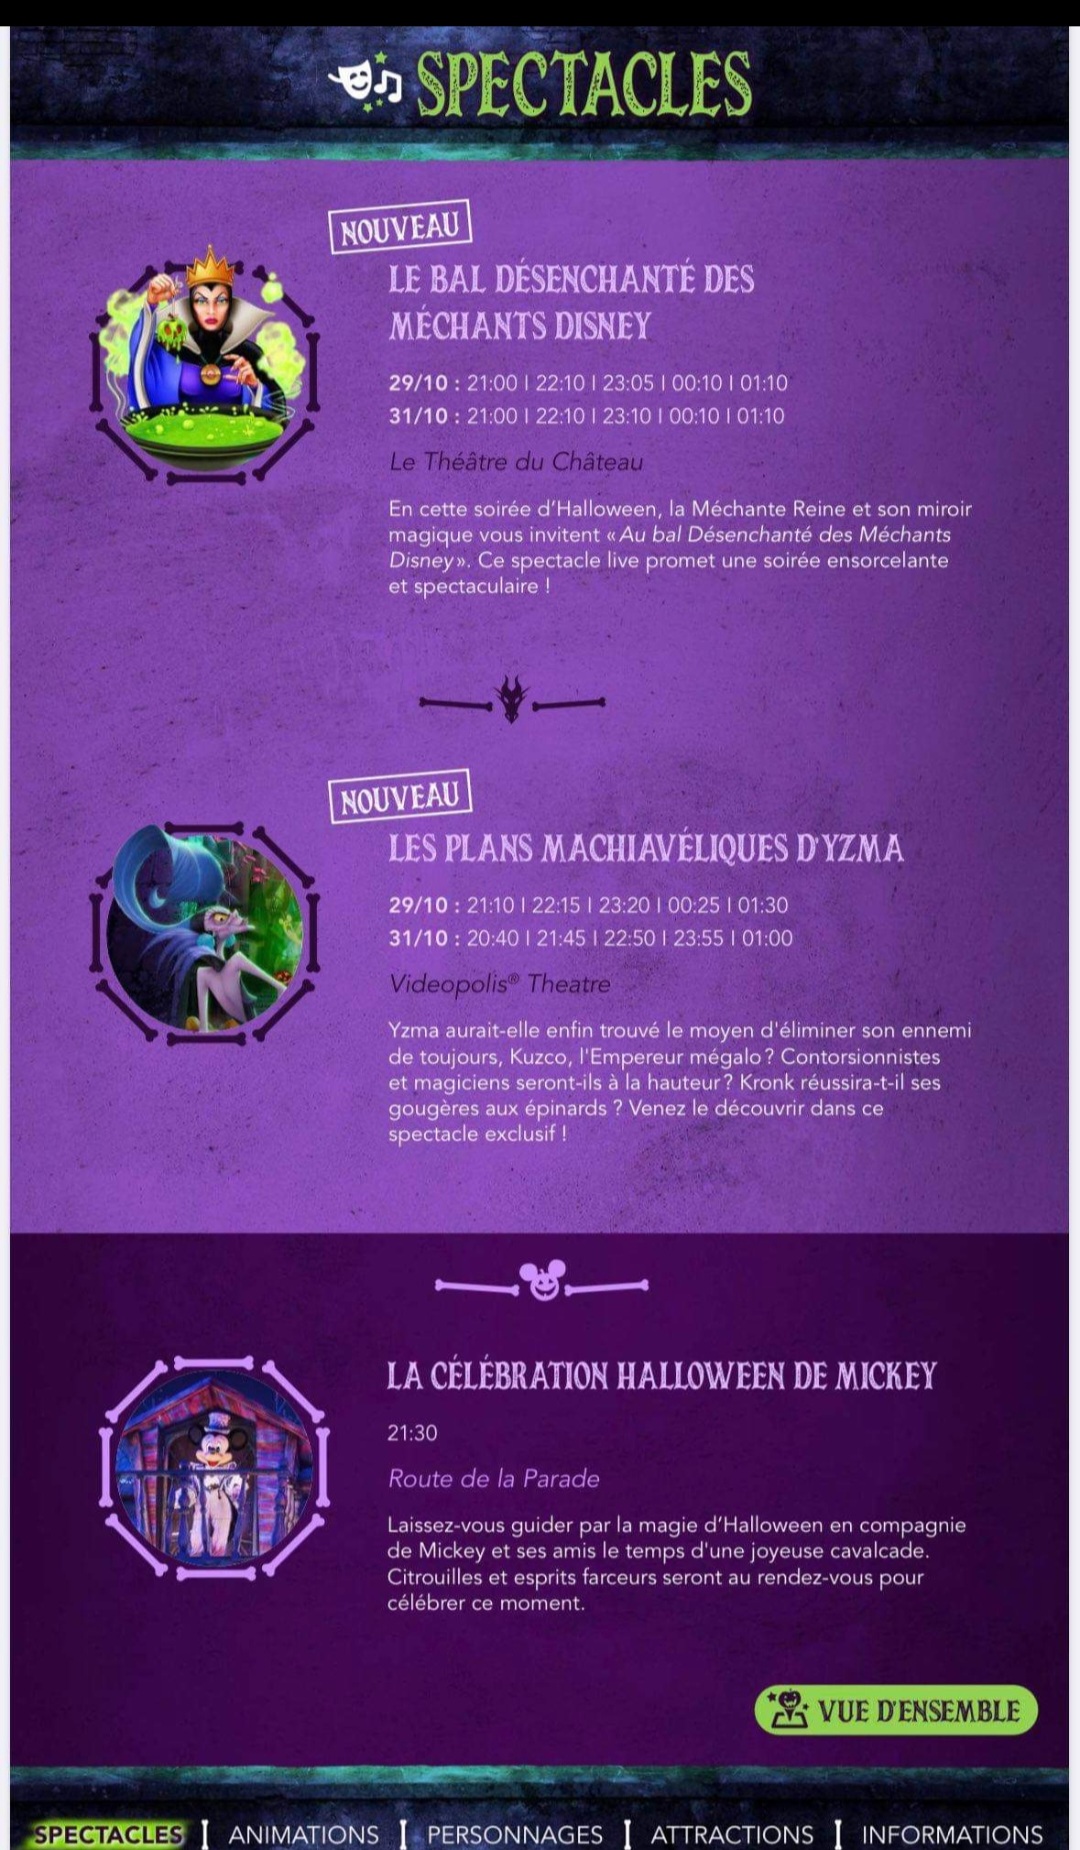  - Soirées Halloween Disney [29 et 31 octobre 2022] - Page 3 Screen26